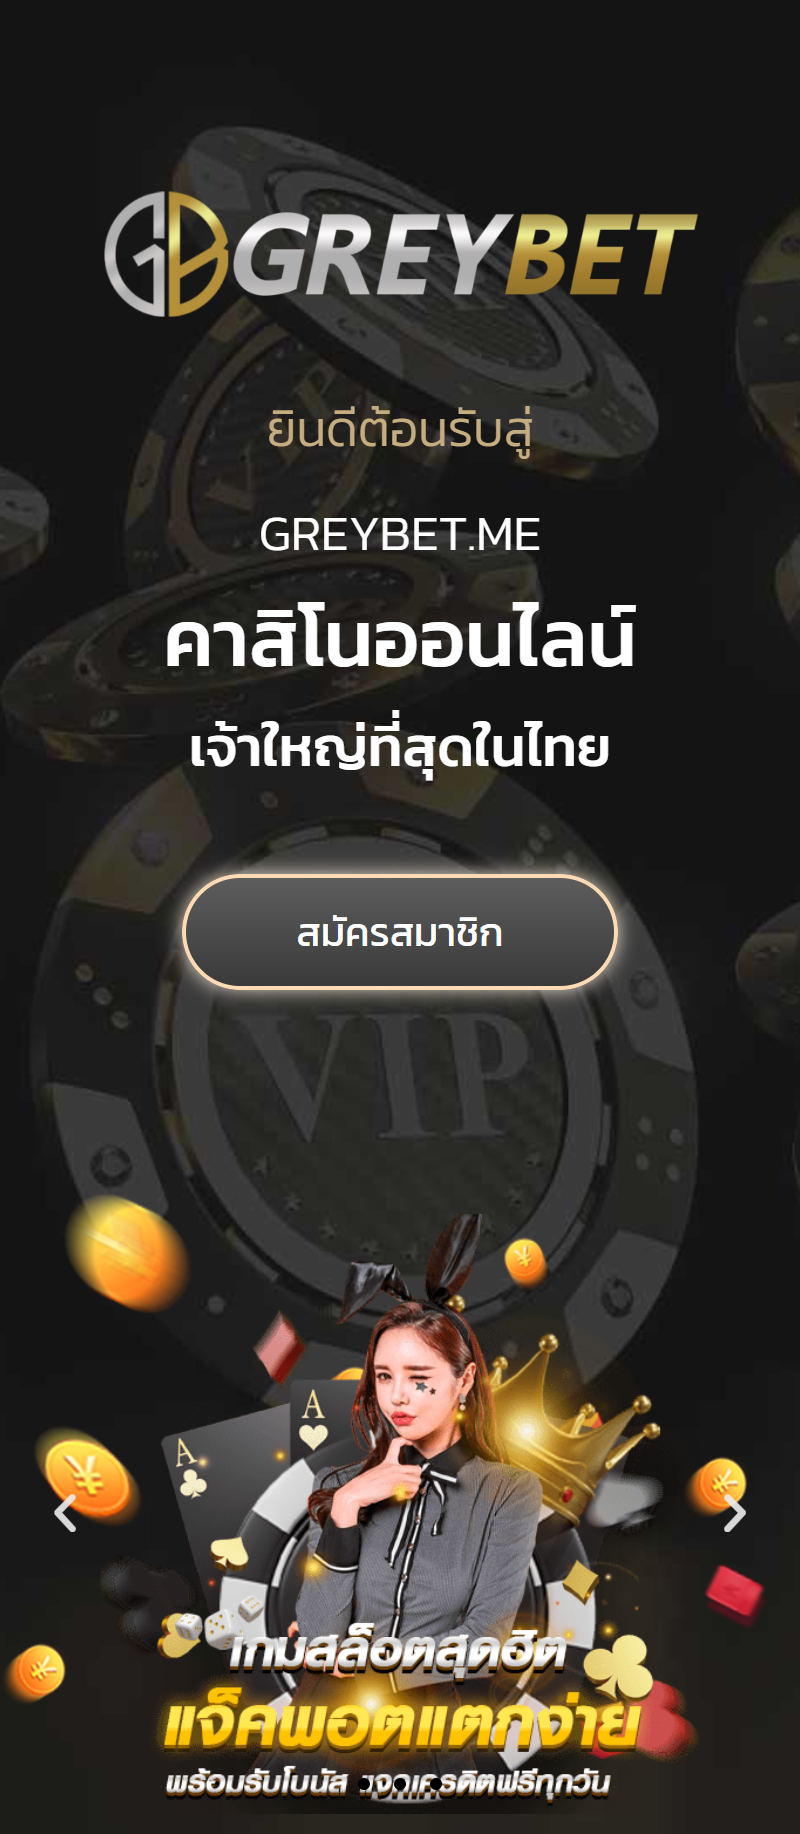 Play greybet